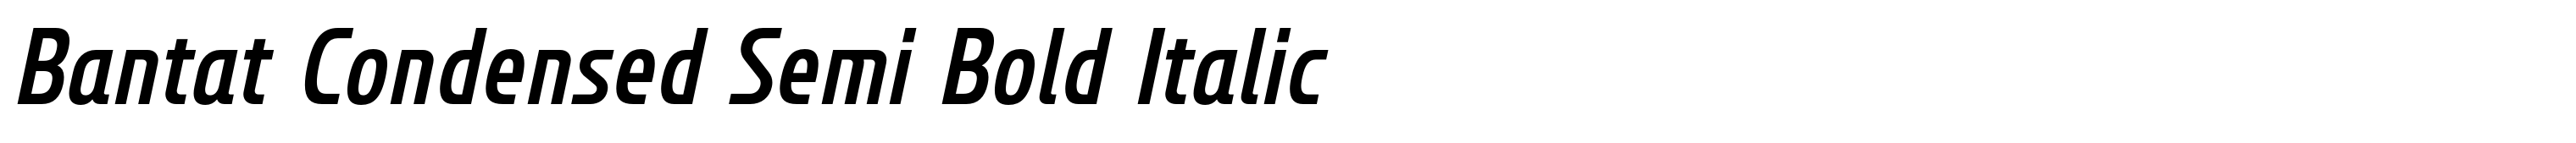 Bantat Condensed Semi Bold Italic